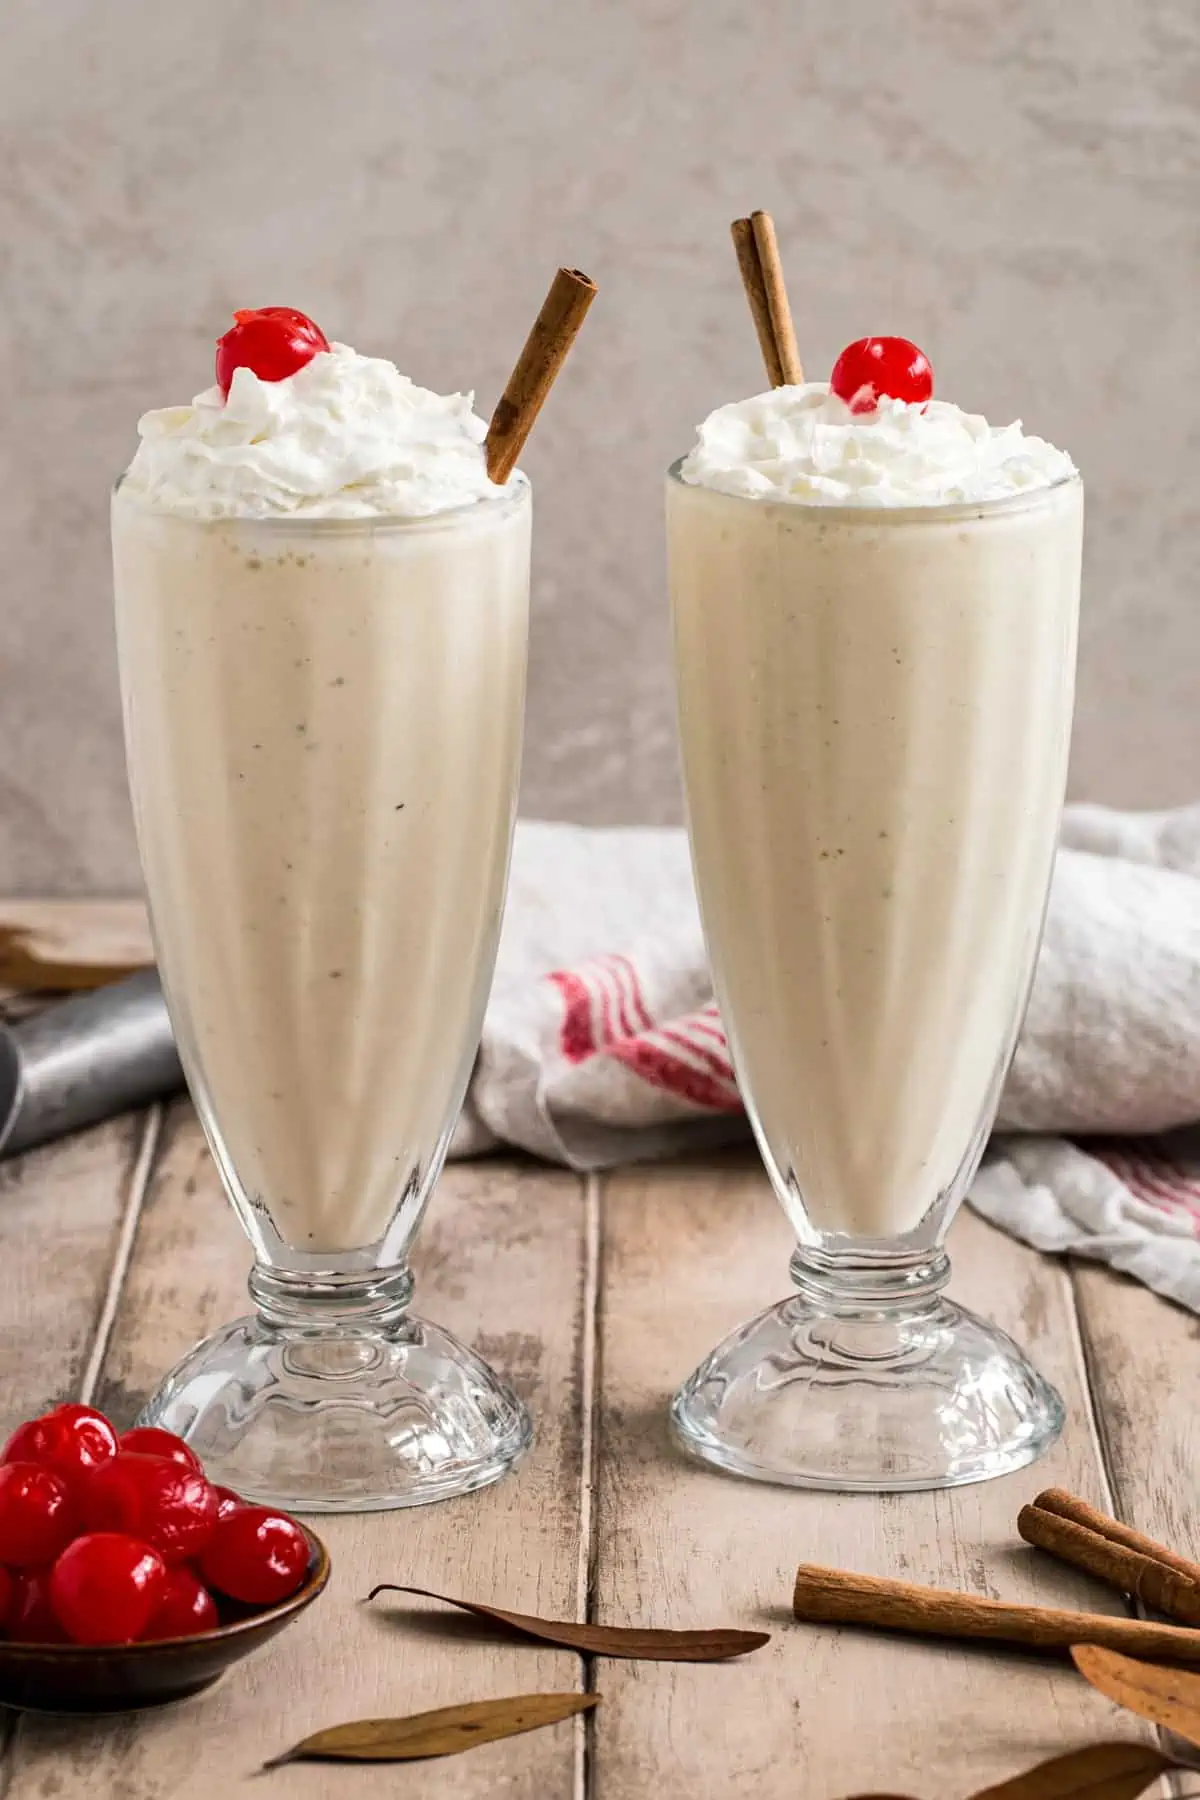 Eggnog milkshakes topped with whipped cream, cherries, and a cinnamon stick in milkshake glasses.